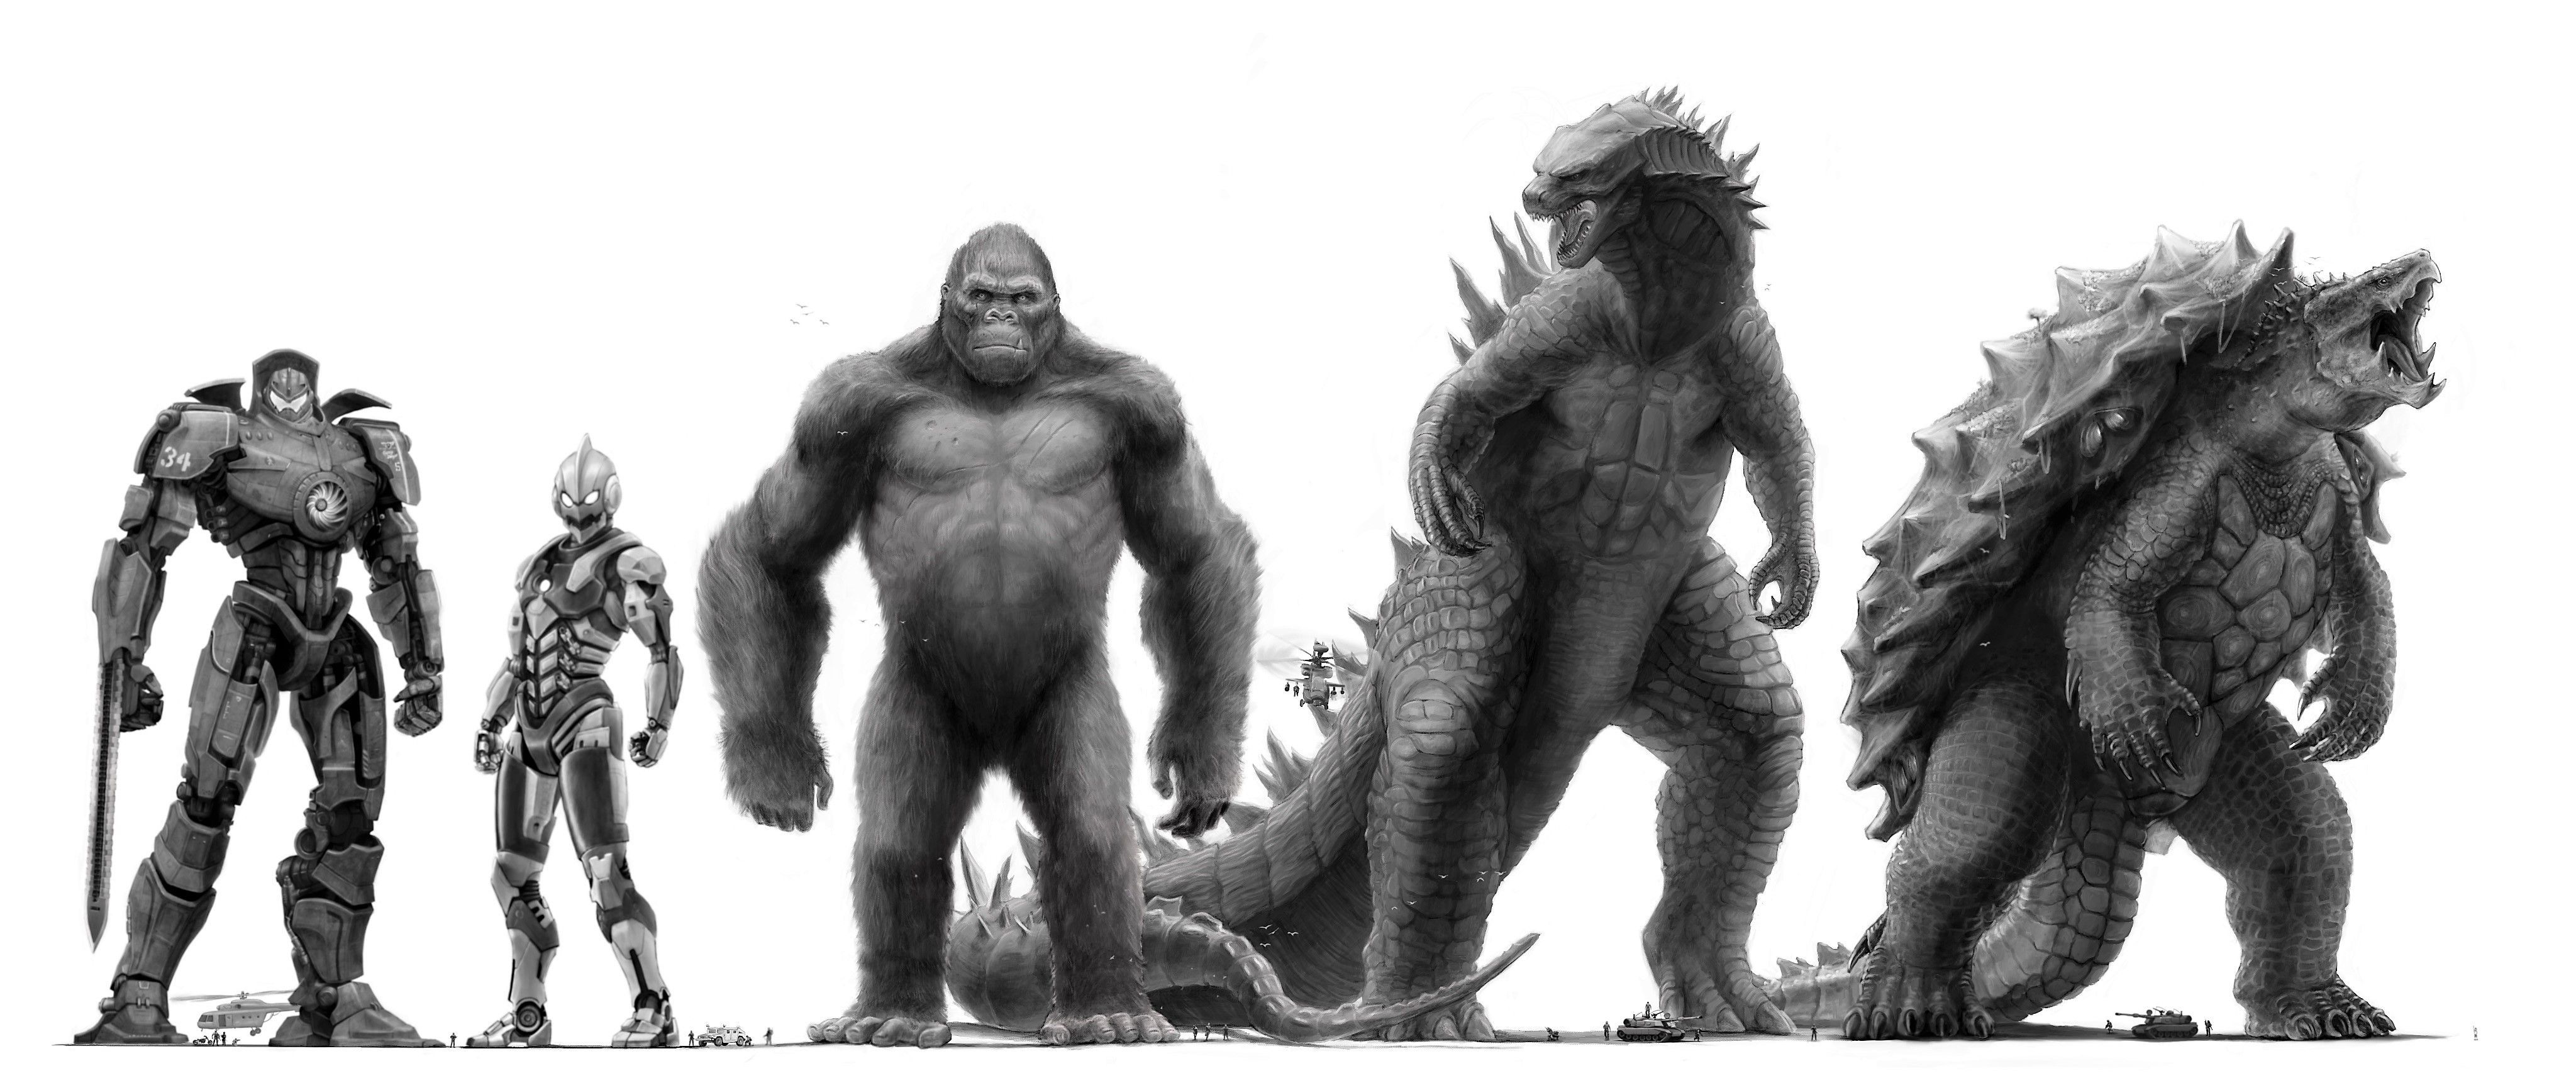 Gipsy Danger, Ultraman, King Kong, Godzilla & Gamera